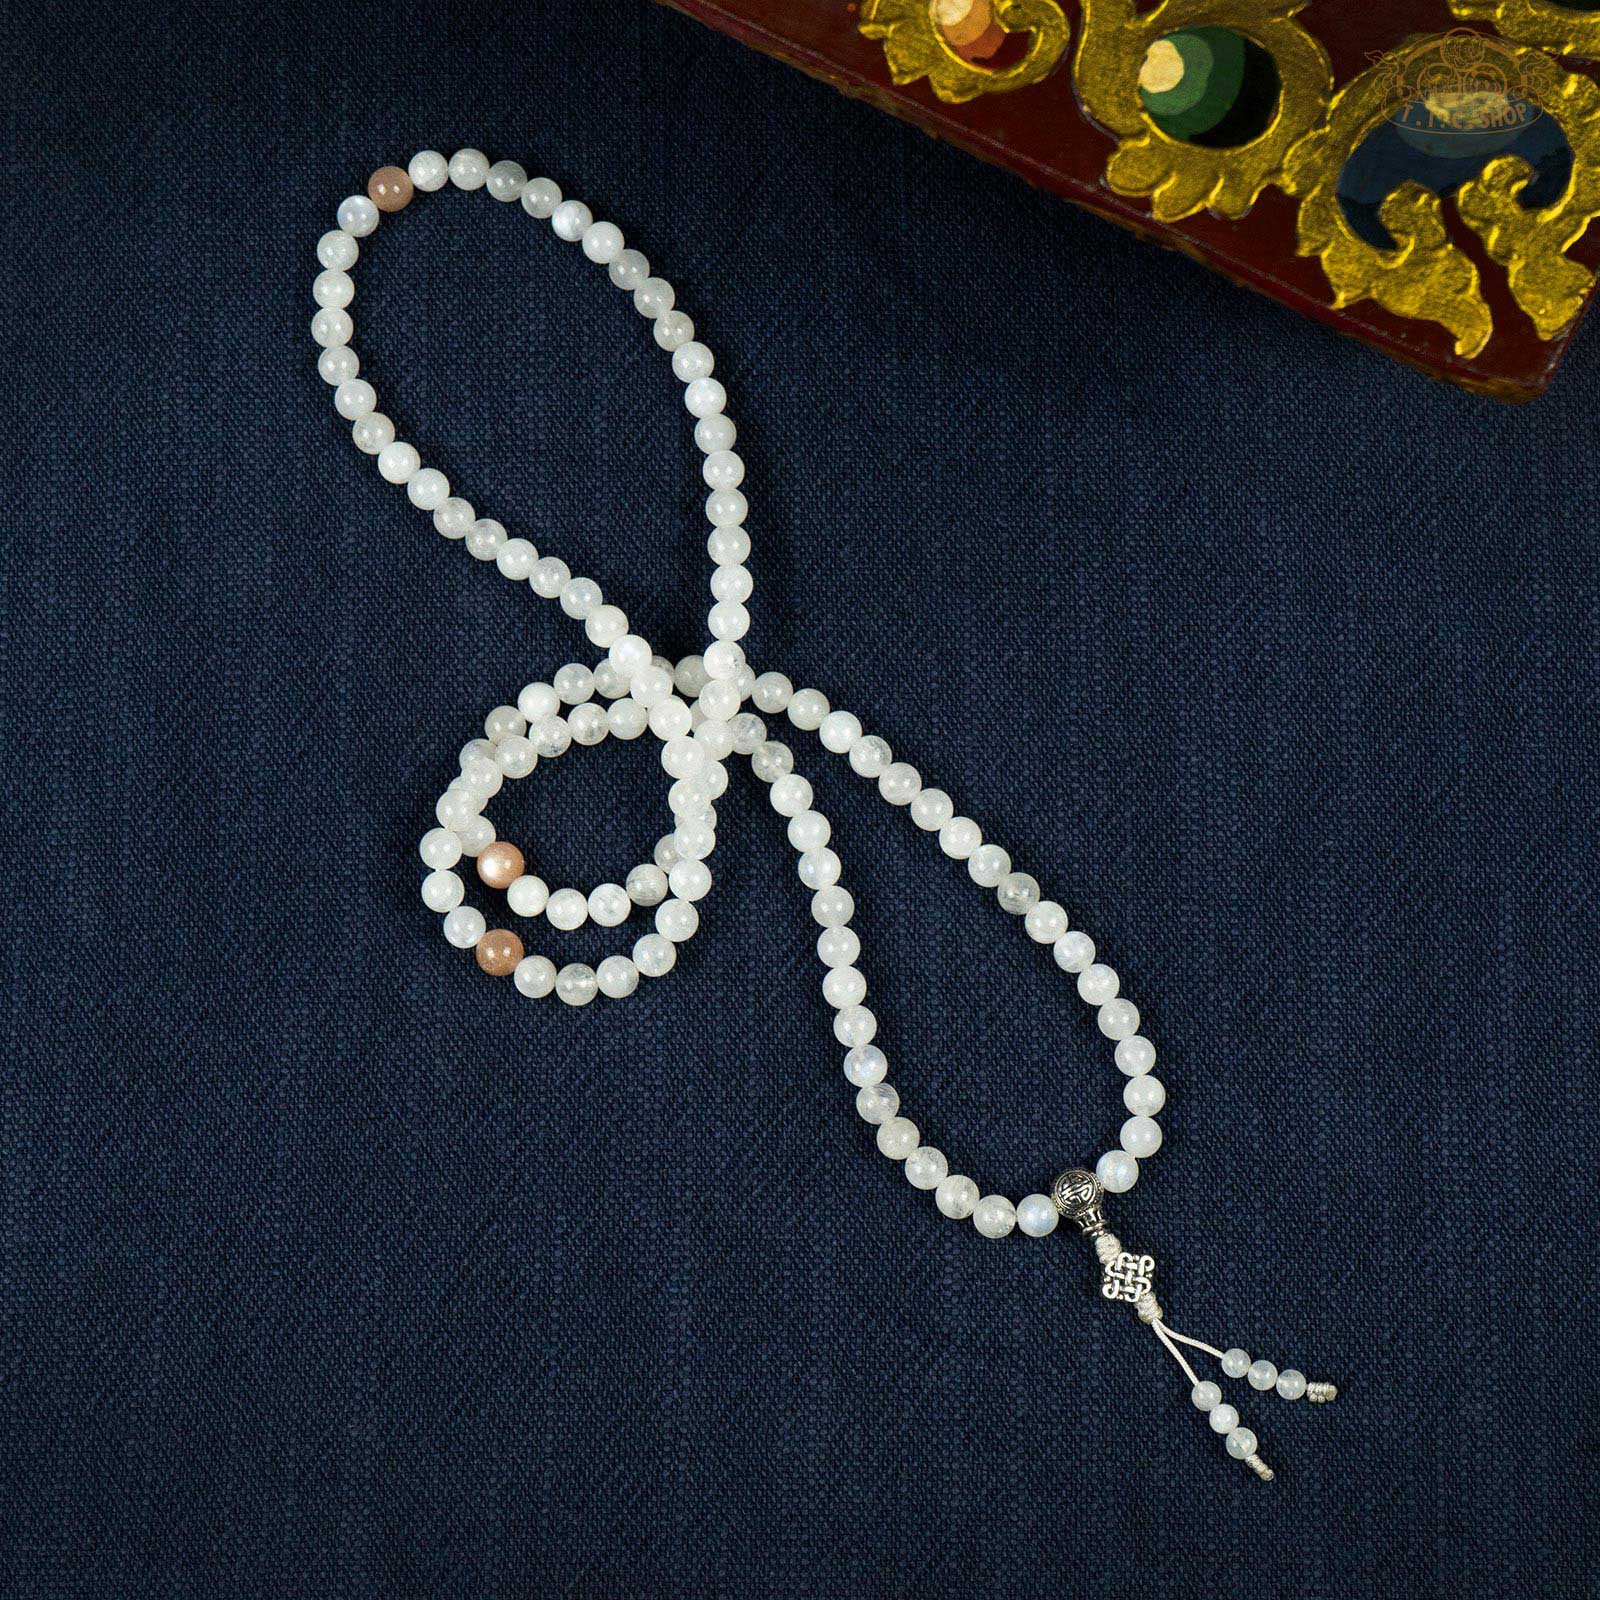 Moonstone 6mm 108 Beads Prayer Mala with 925 Silver Guru Bead